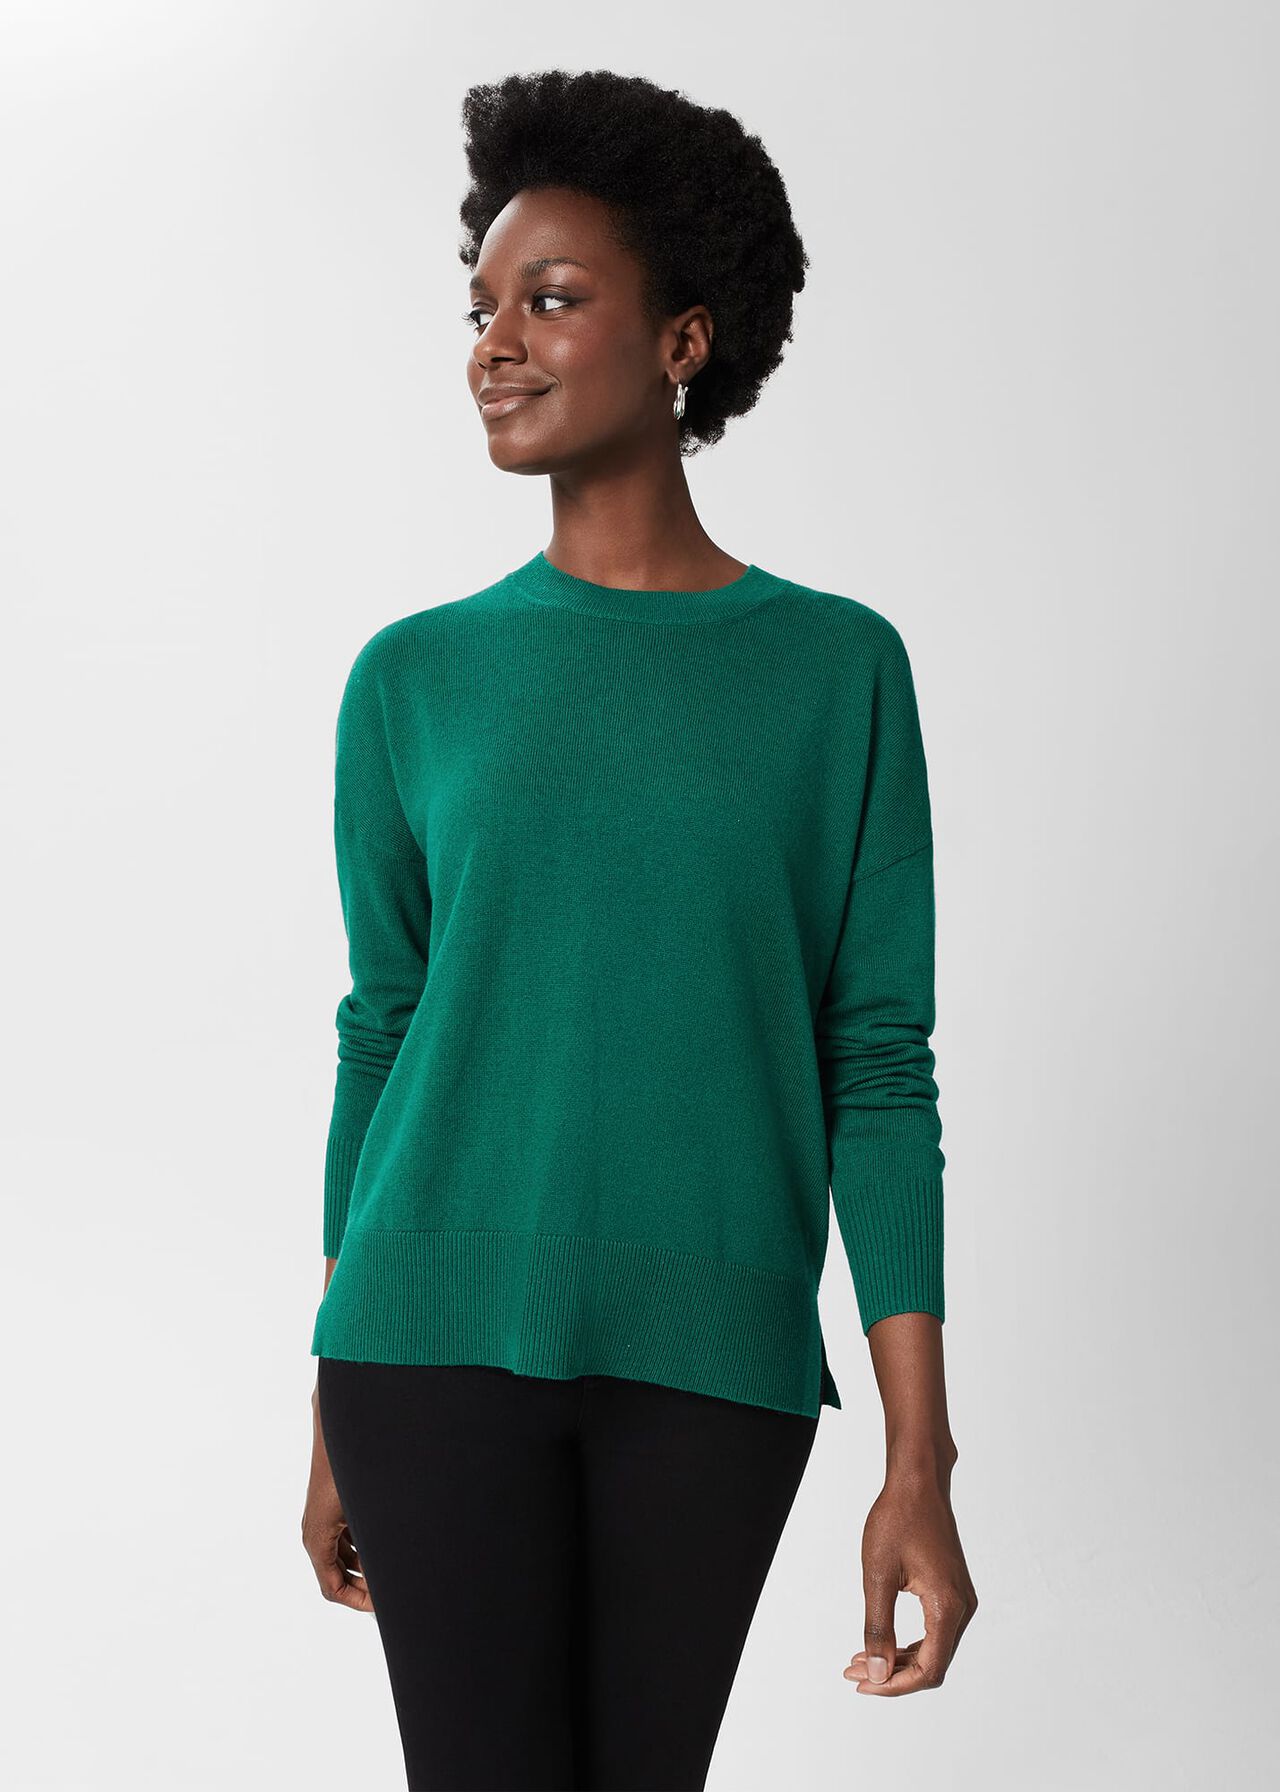 Lydia Button Sweater, Ocean Green, hi-res